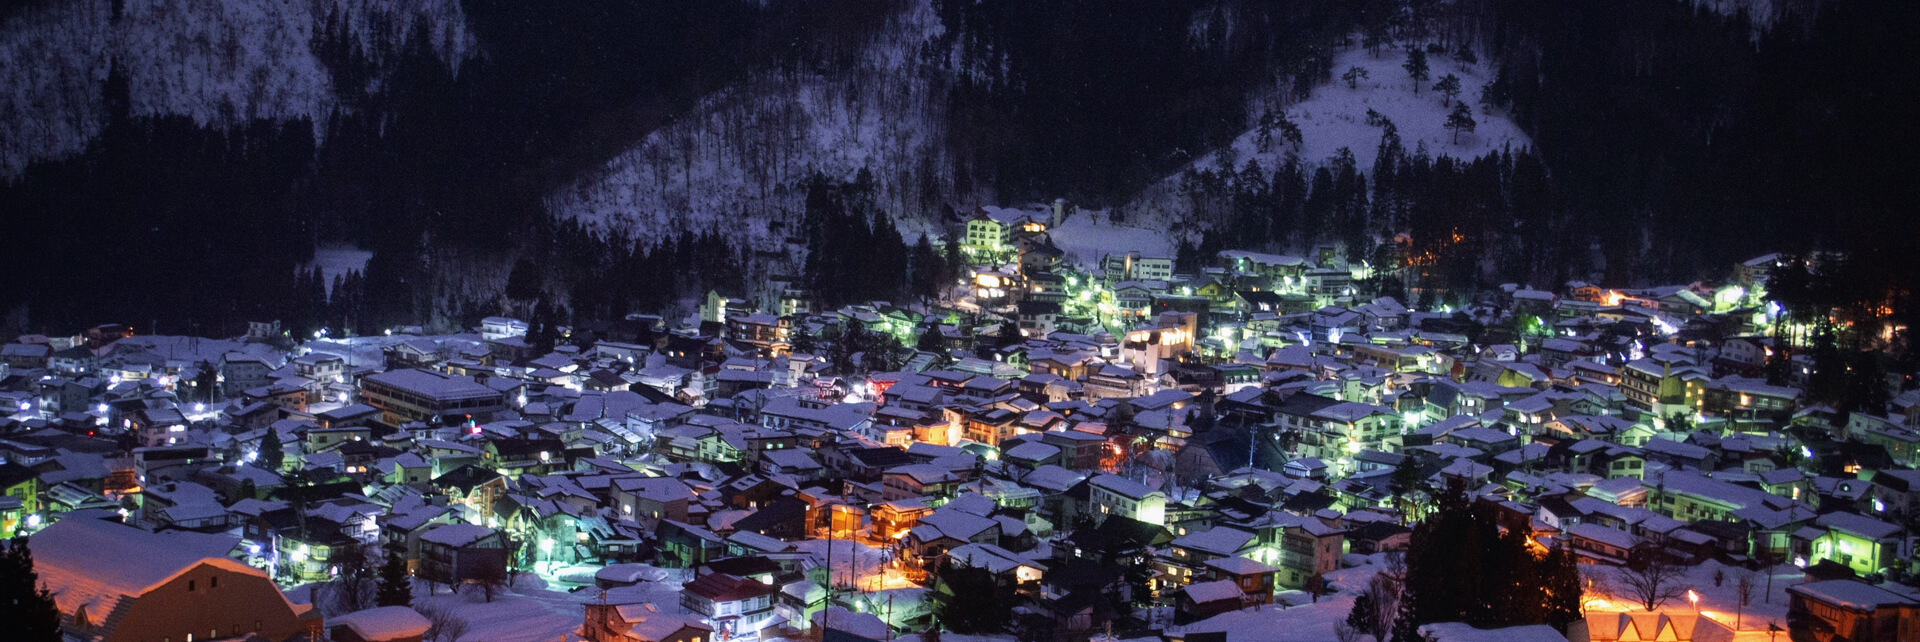 Nozawa Onsen accommodation in Nagano Japan